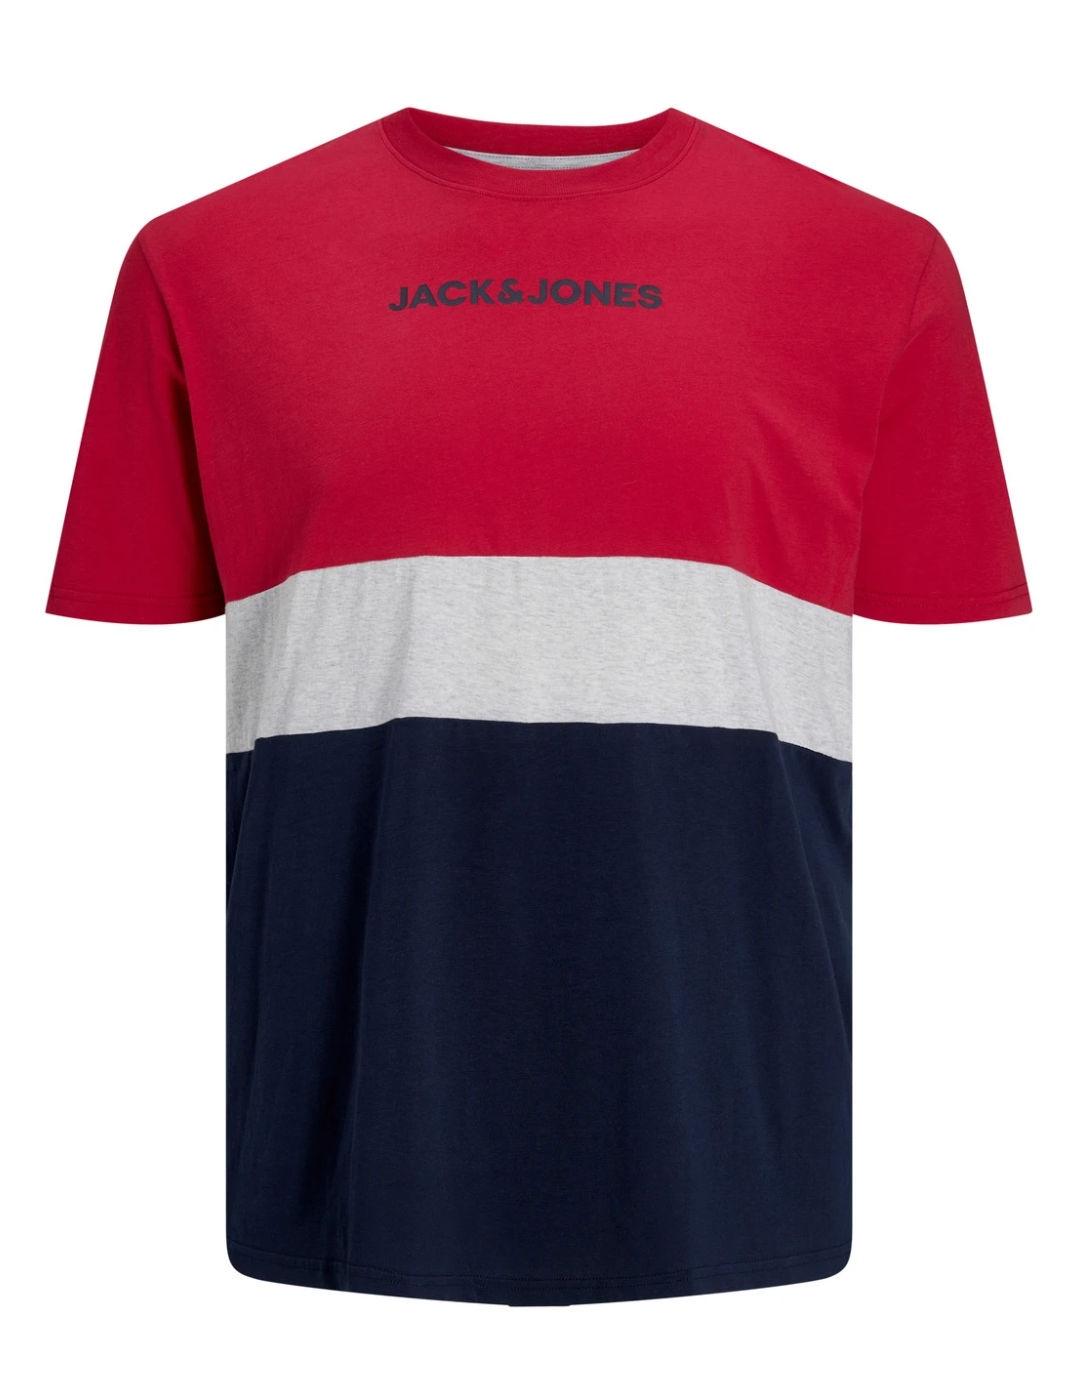 Camiseta Jack&Jones Ereid Plus azul/rojo manga corta hombre